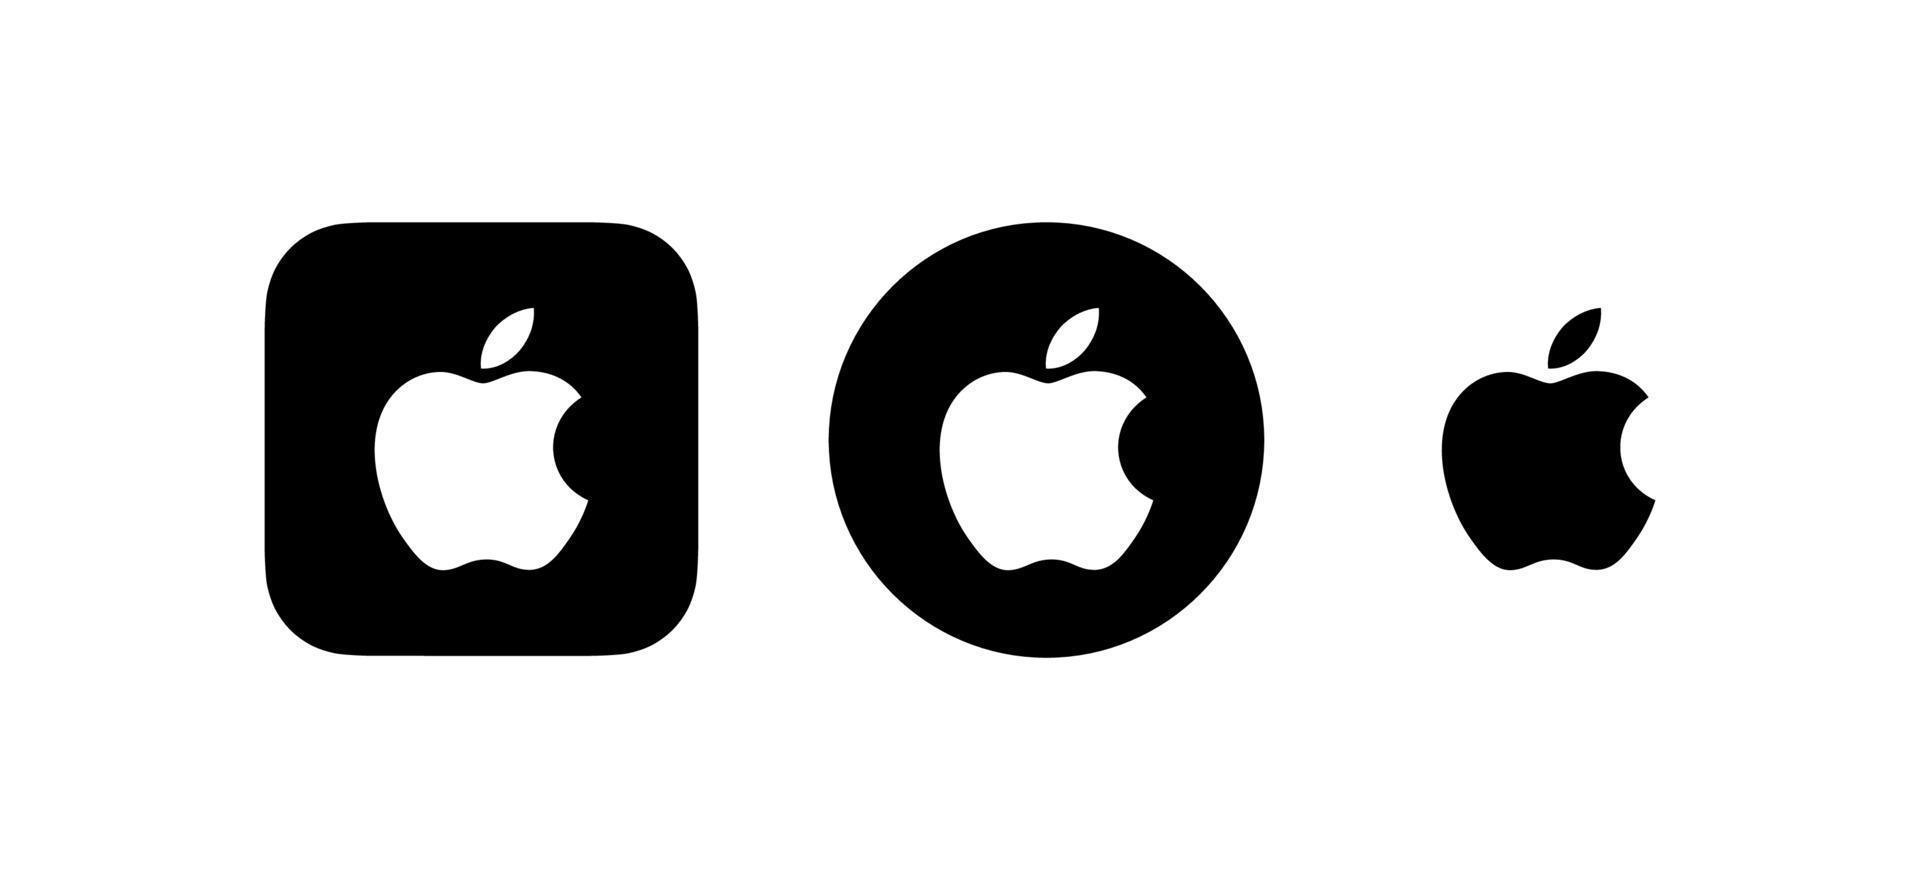 apple logo vector, apple icon free vector